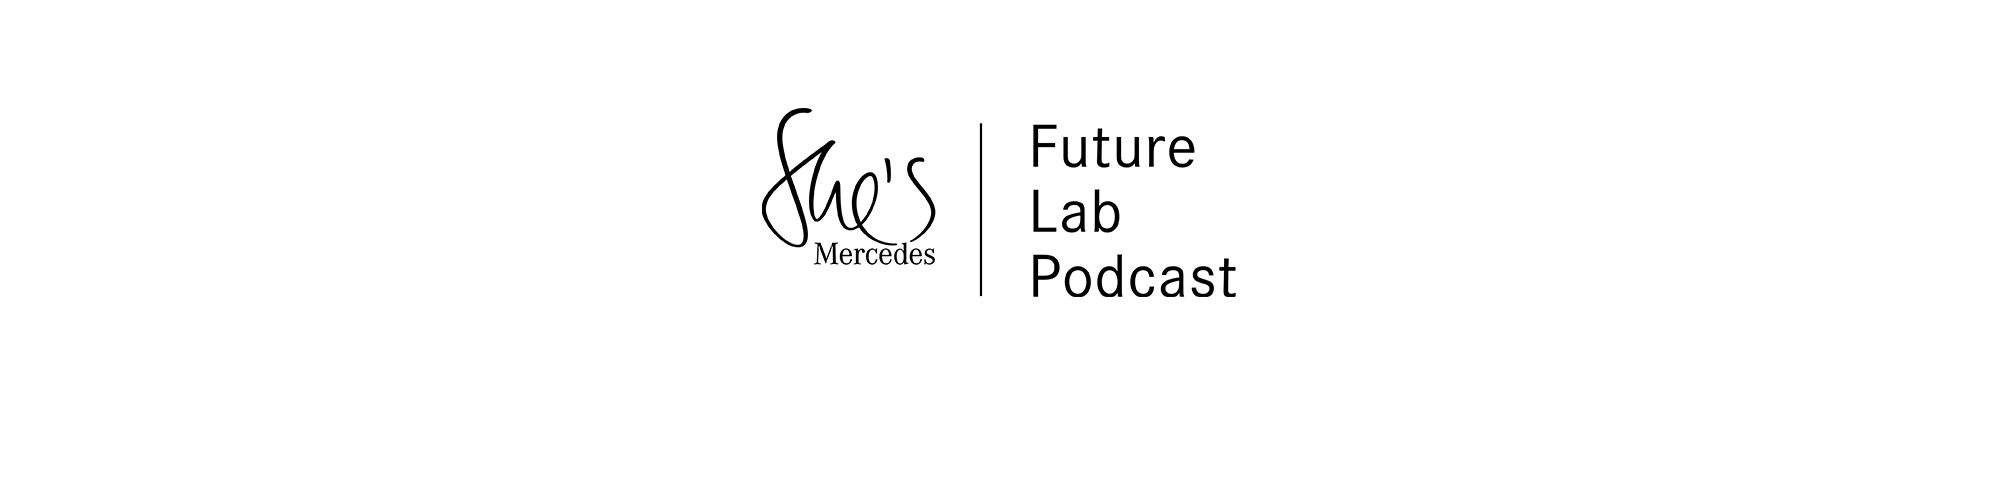 She's Mercedes Future Lab Podcast